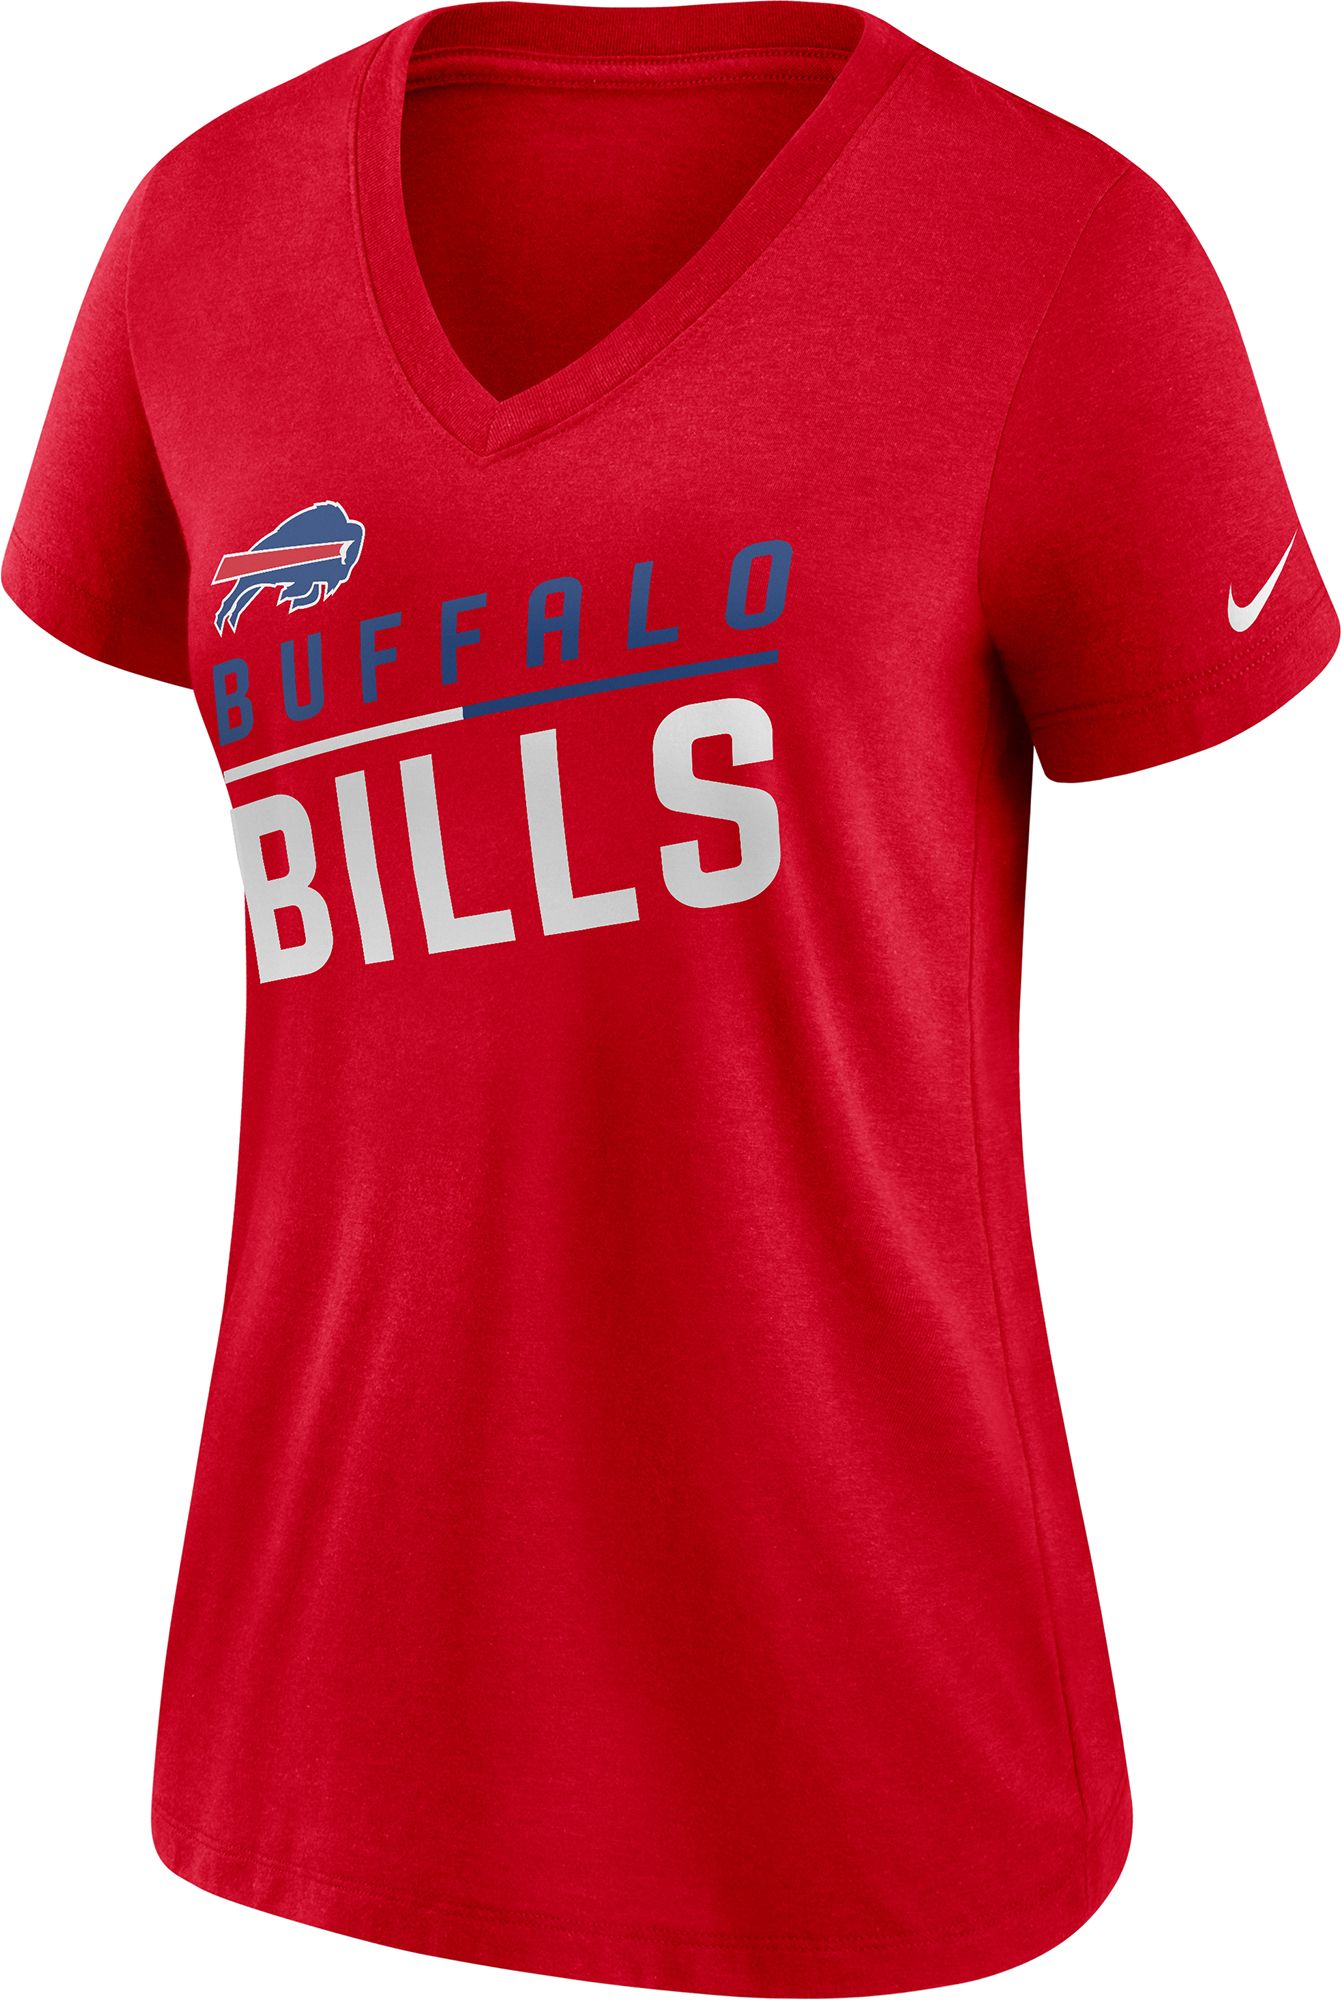 buffalo bills nike shirts